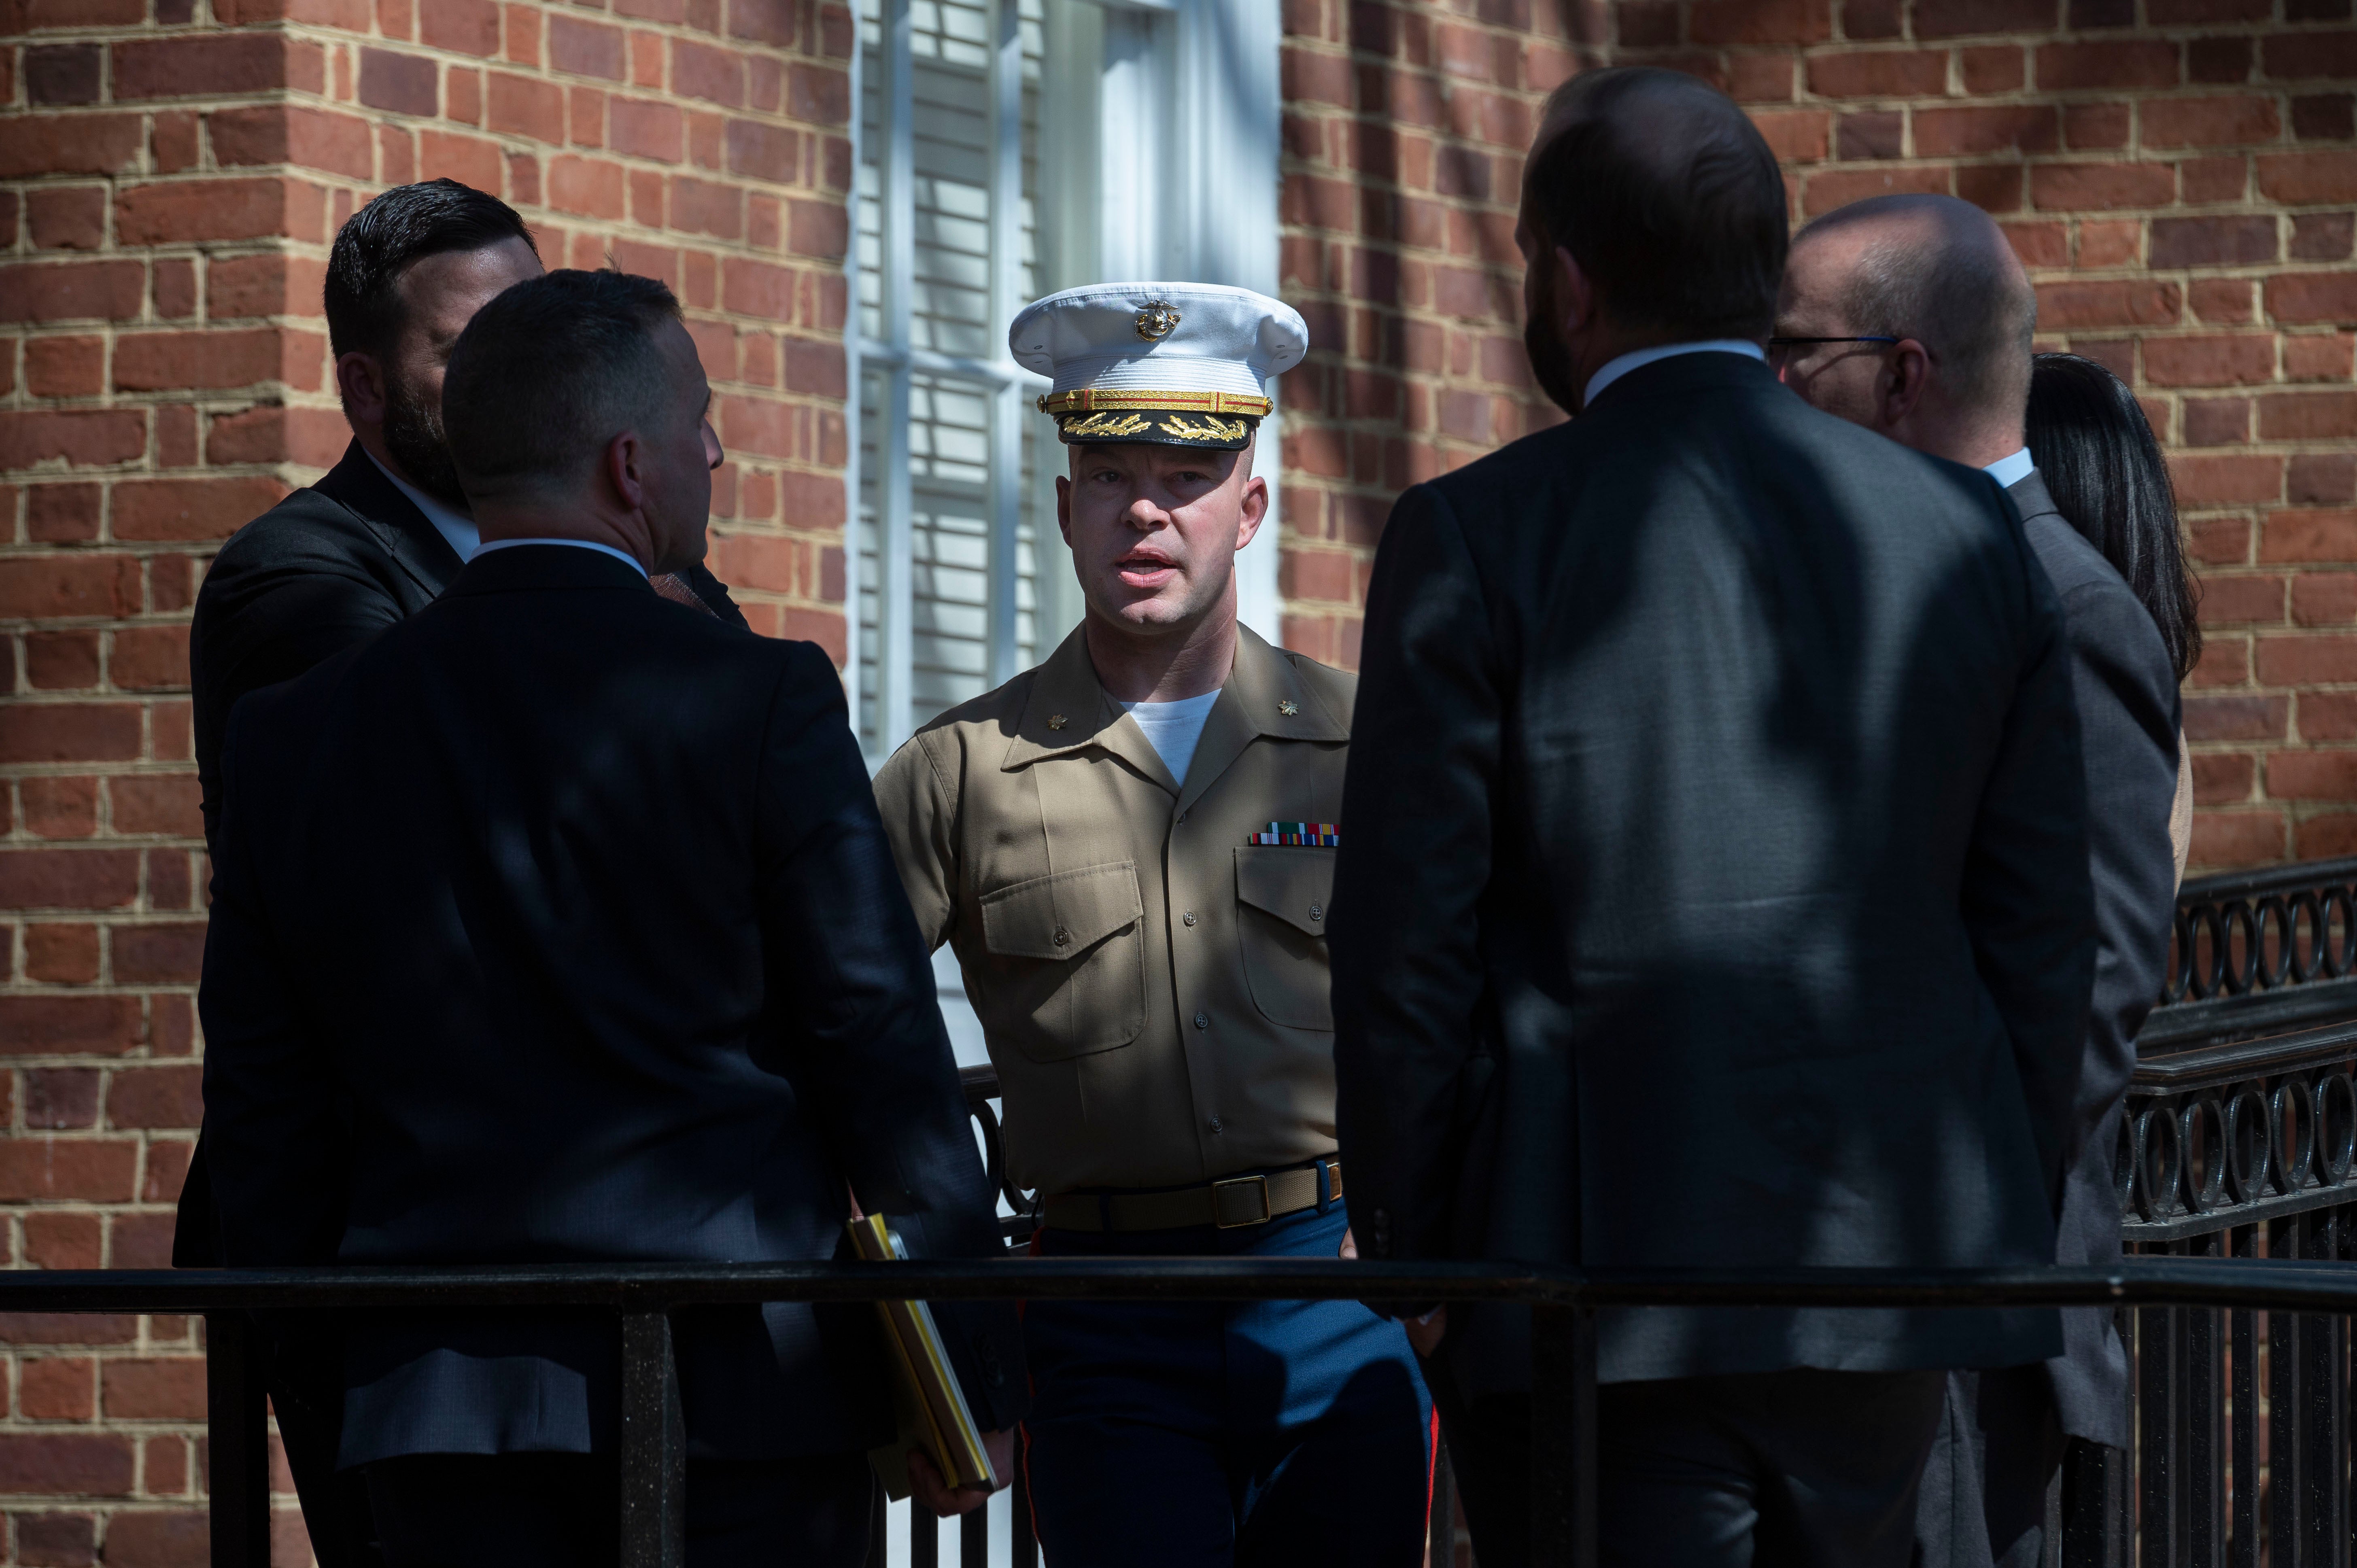 US Marine Corp Major Joshua Mast, center, talks with his attorneys